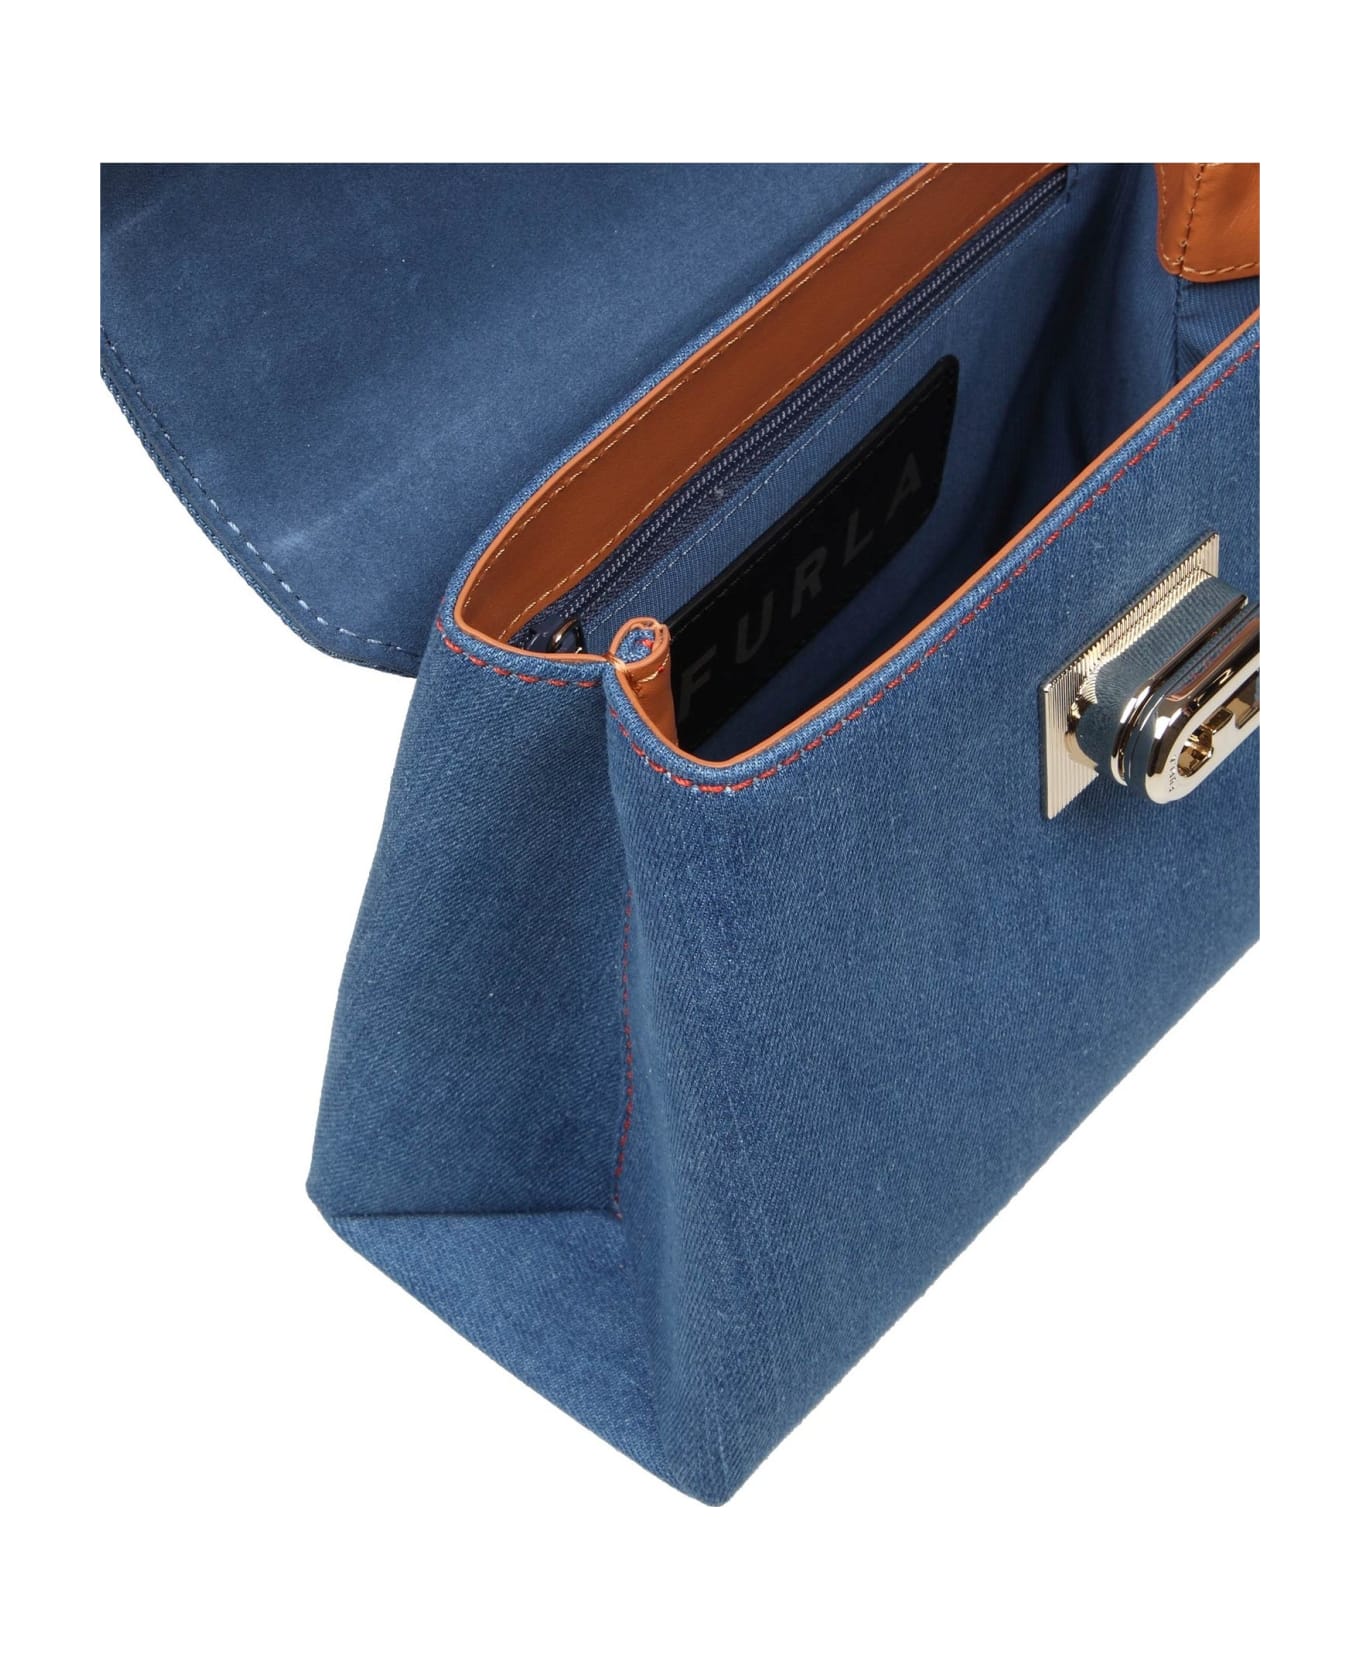 Furla 1927 Mini Handbag In Blue Jeans Fabric - Mediterranean blue トートバッグ